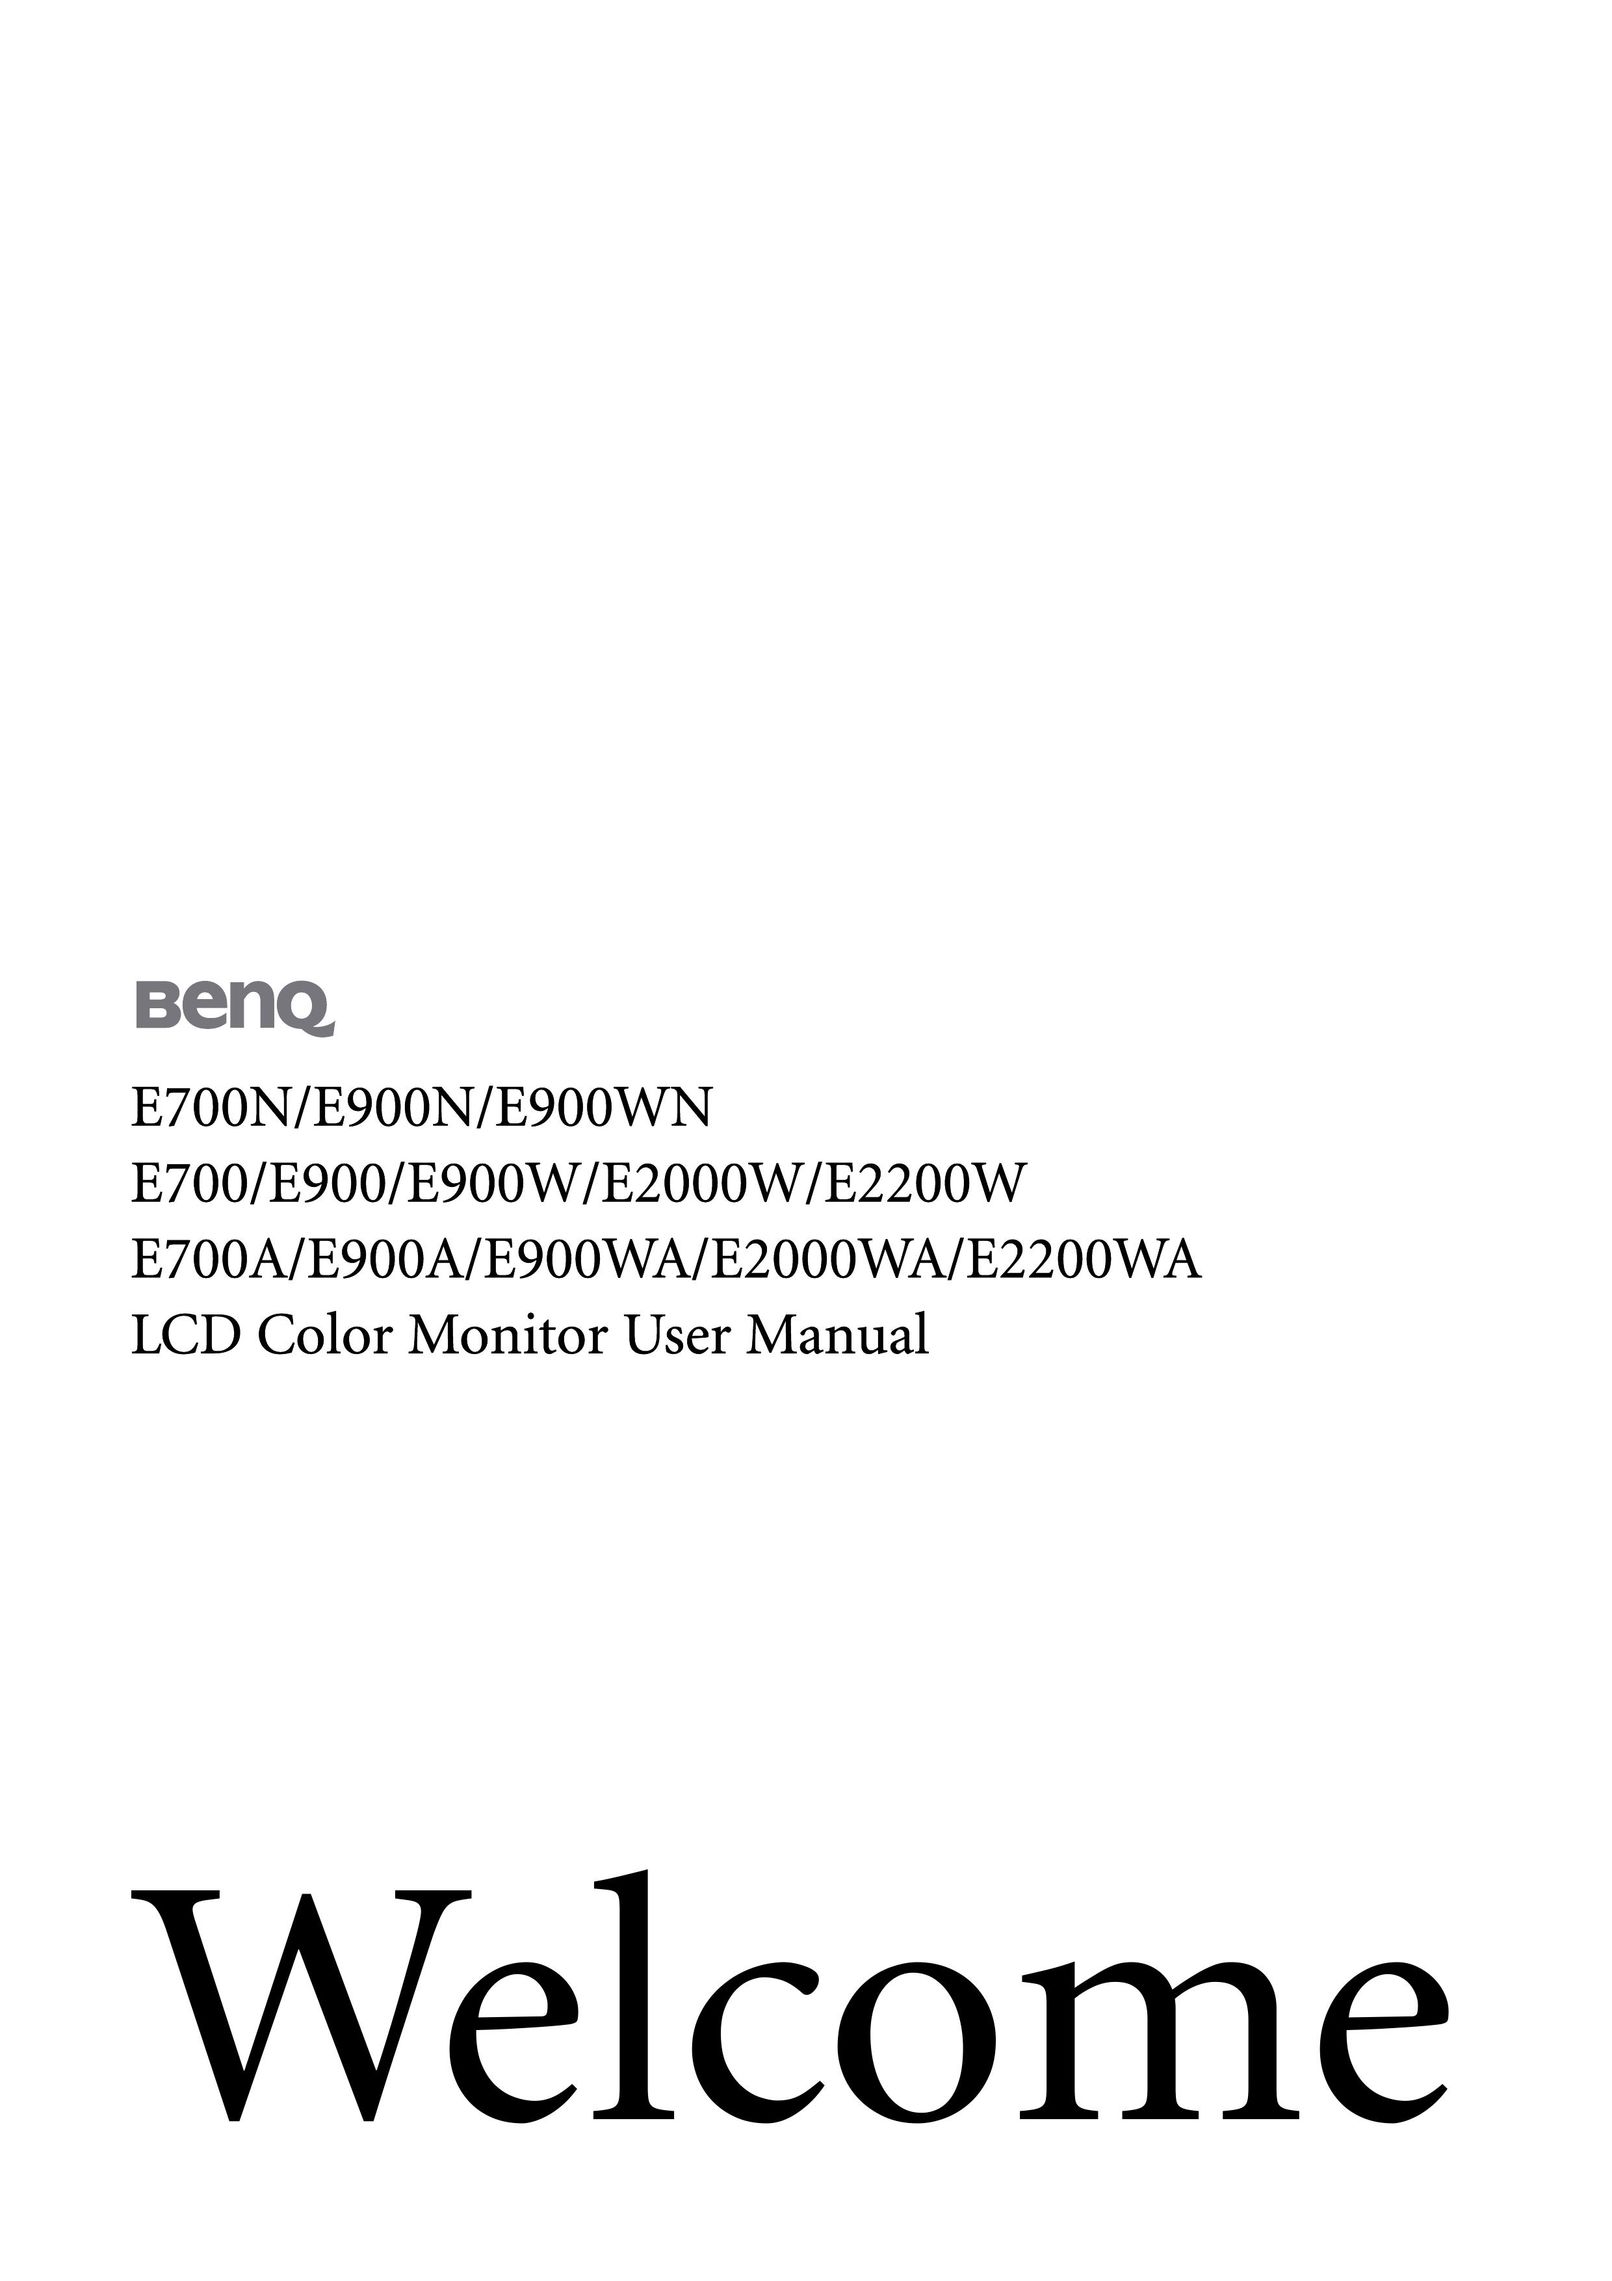 BenQ E2000WA Computer Monitor User Manual